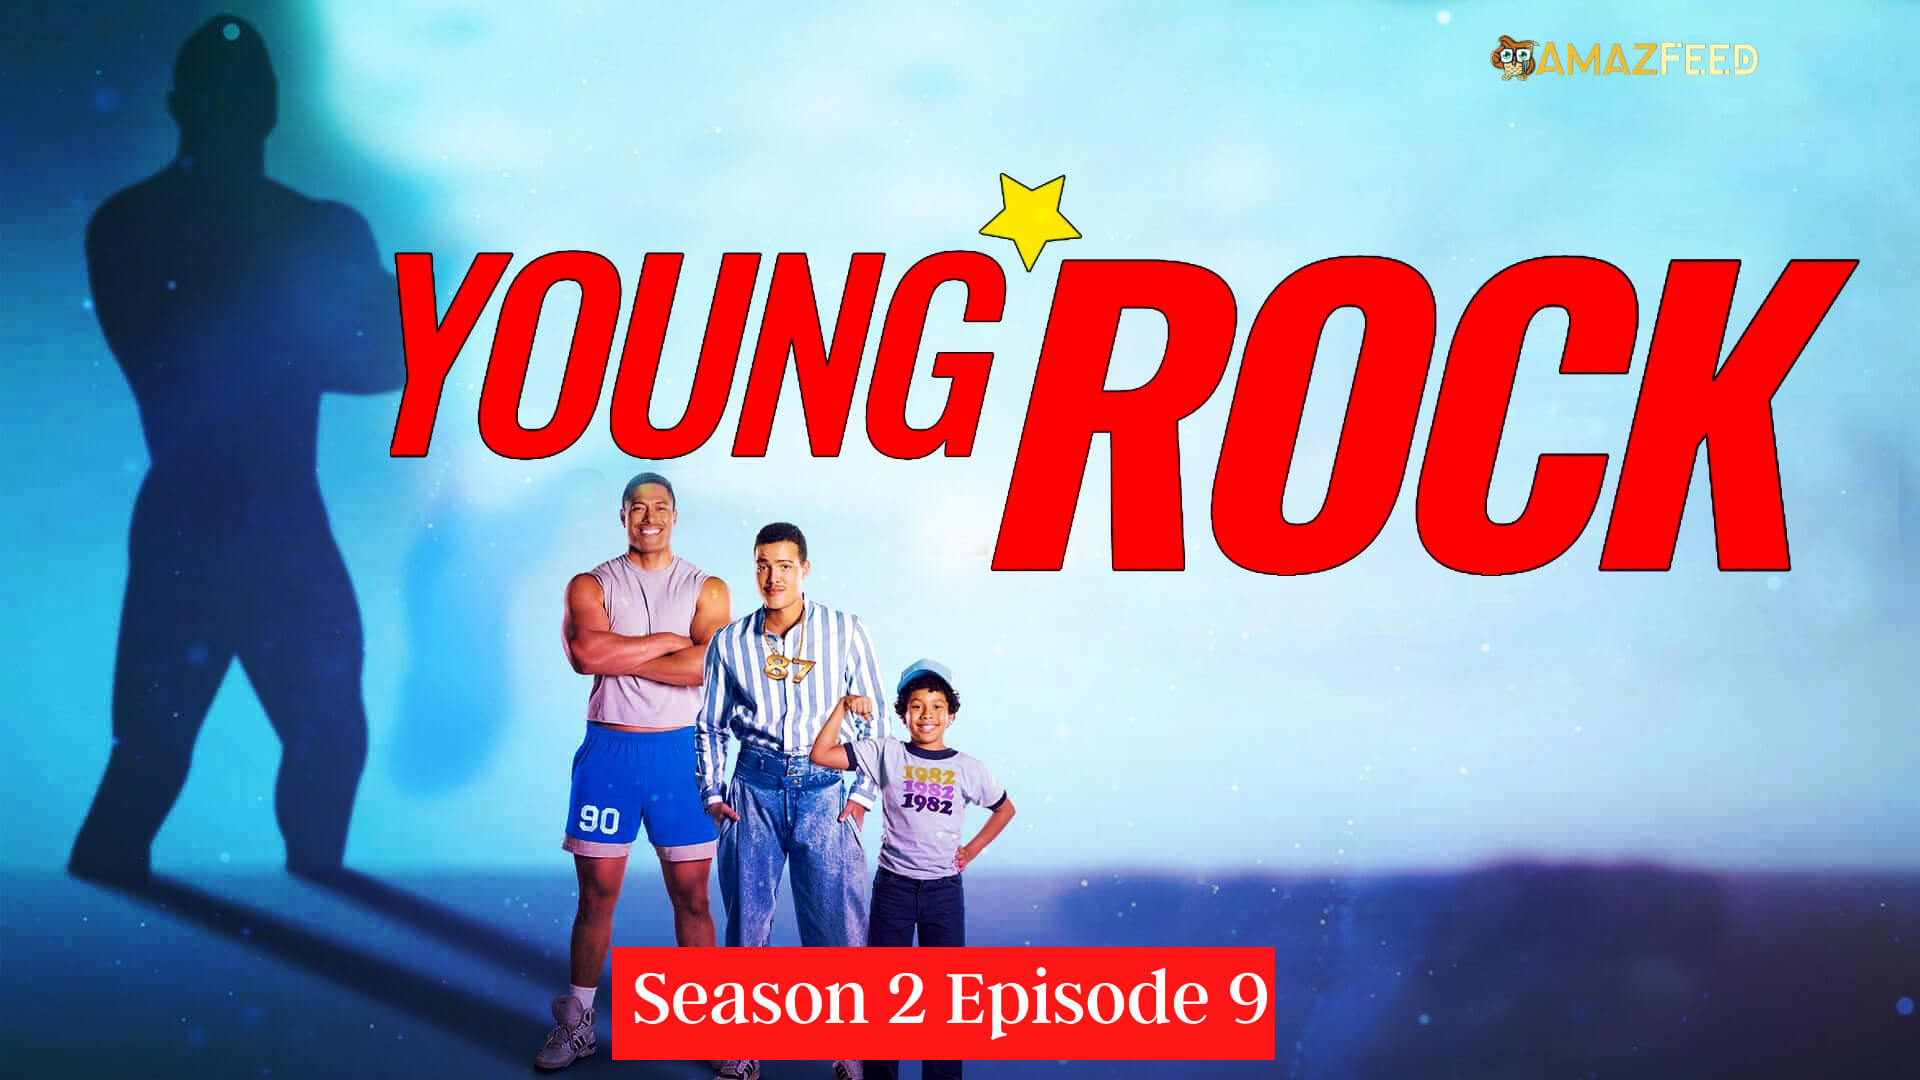 Young Rock Season 2 Episode 9 Release Date